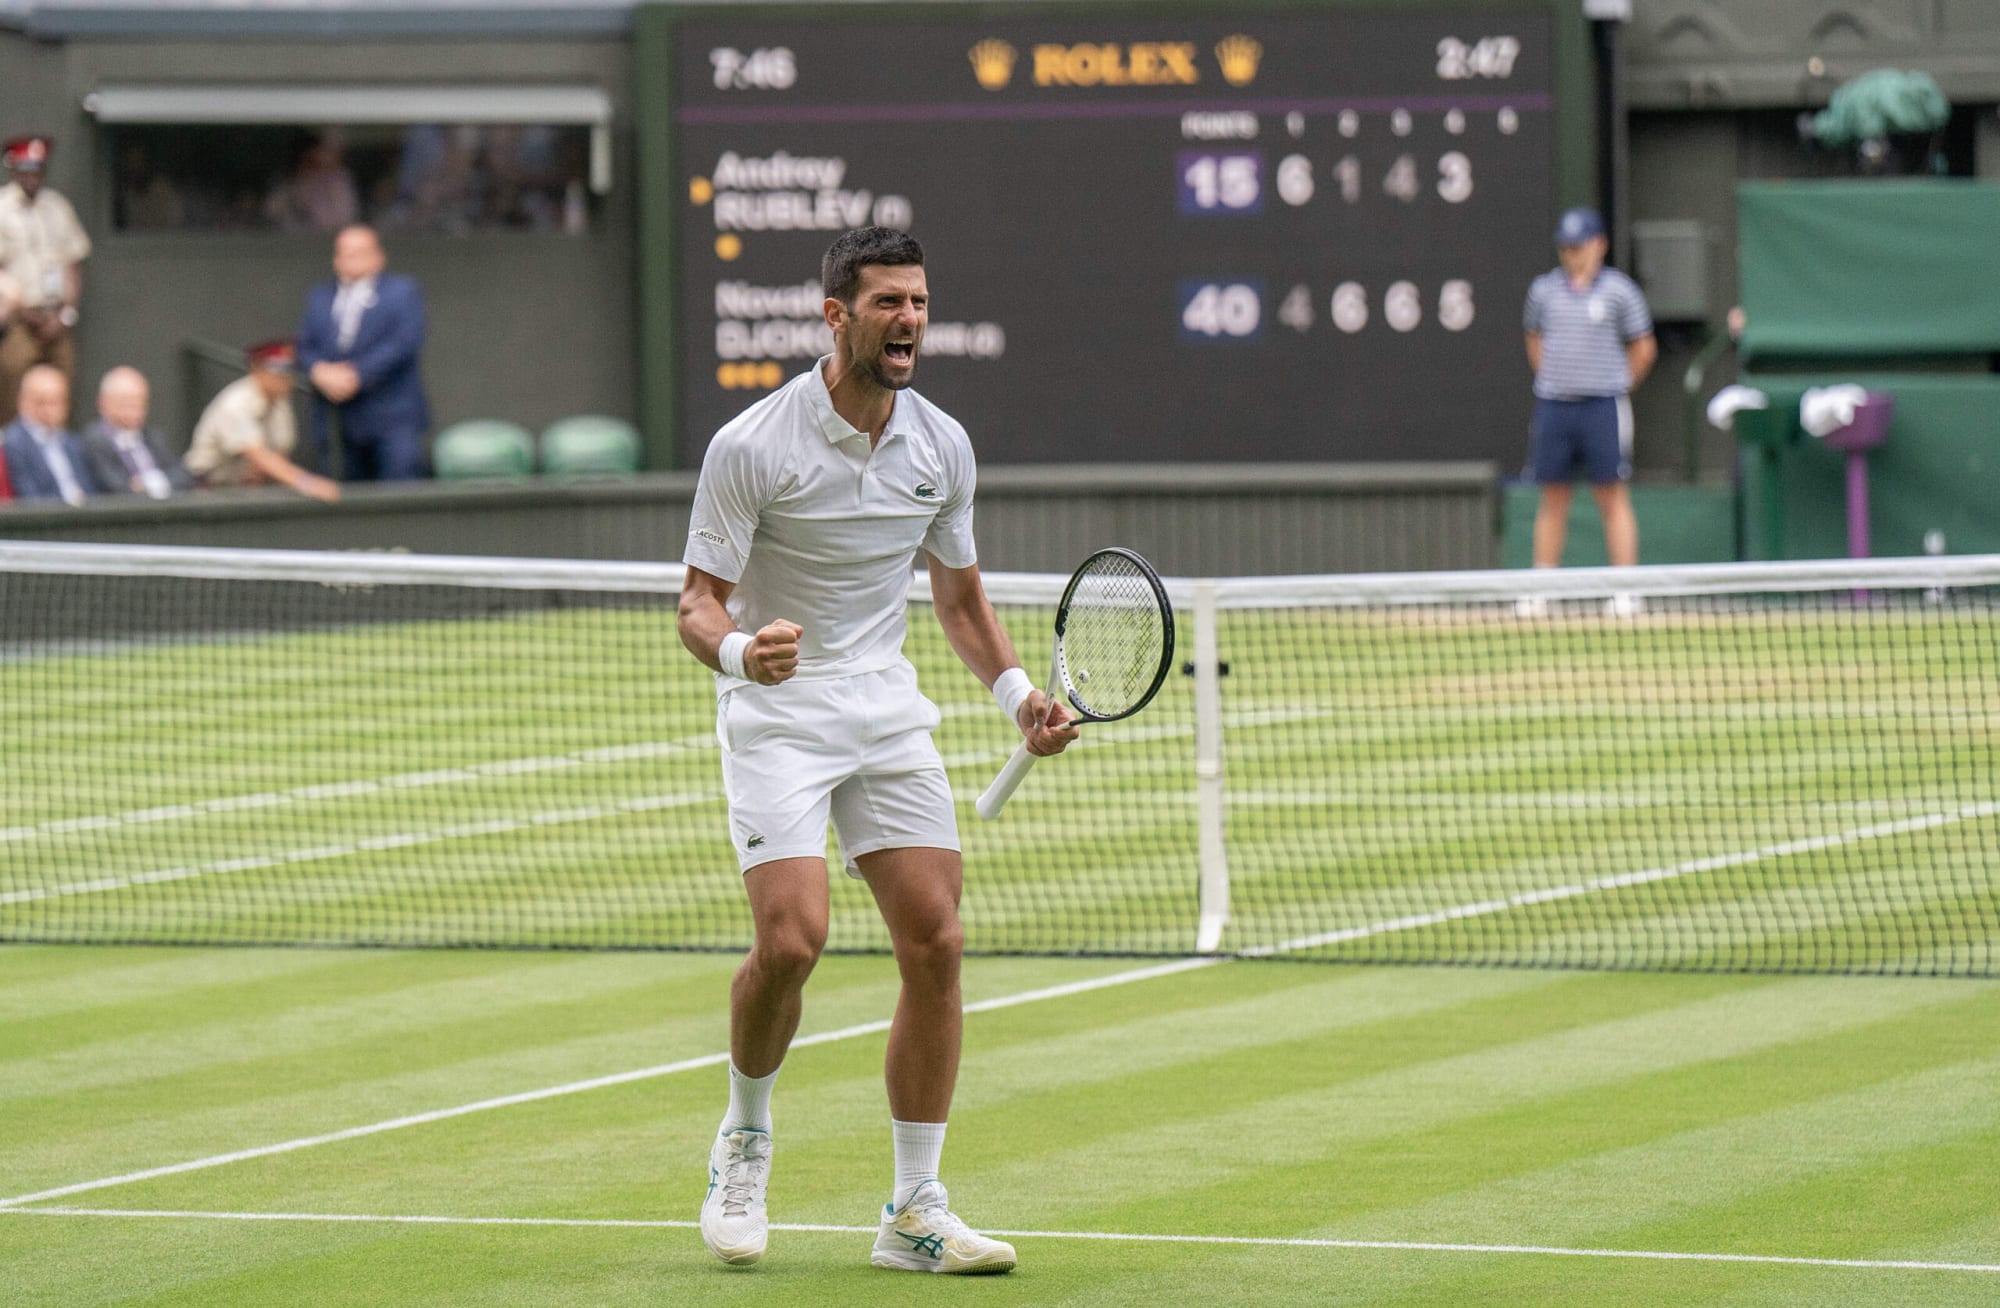 Jannik Sinner vs. Novak Djokovic prediction and odds for Wimbledon